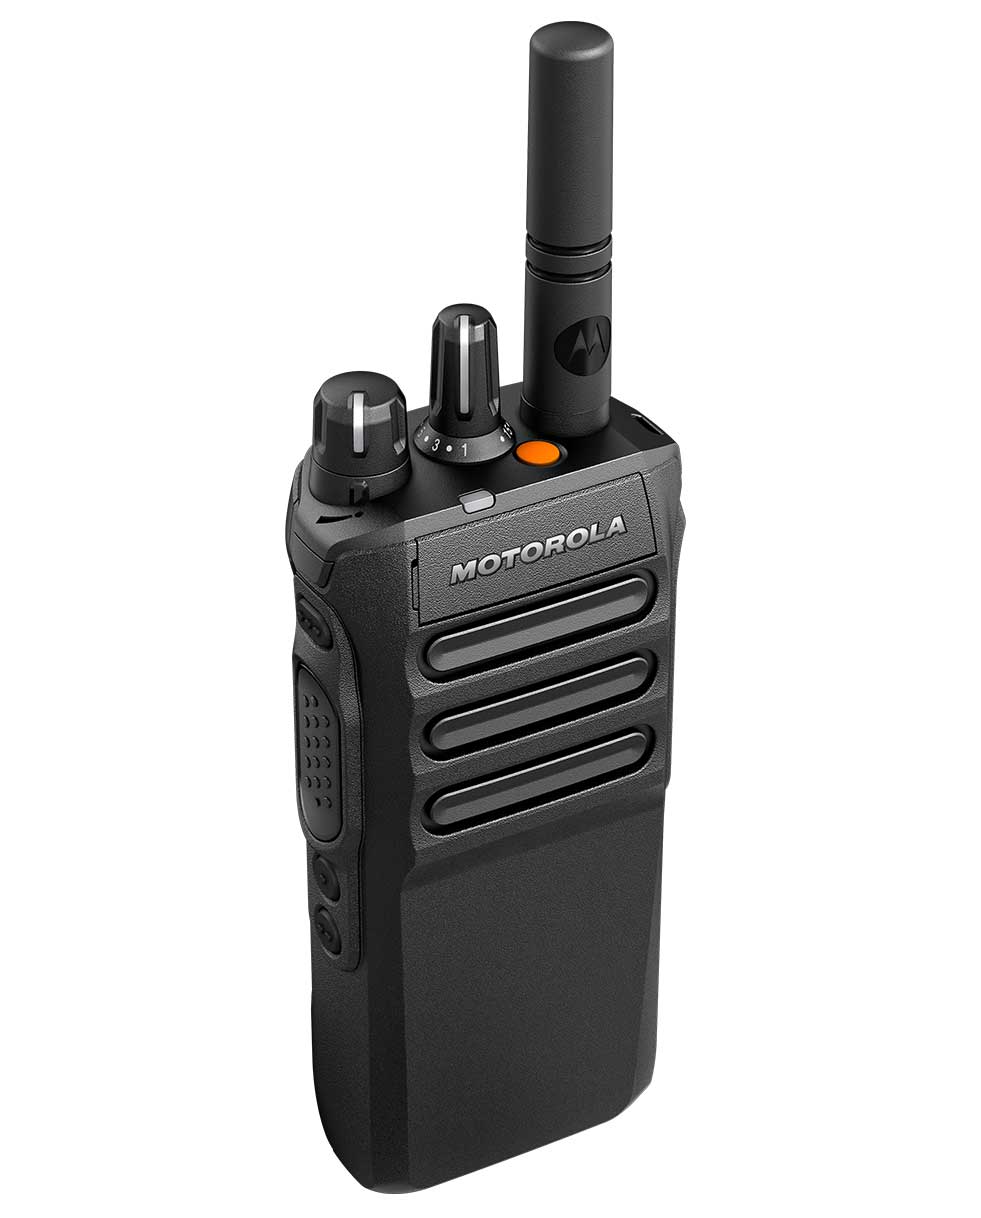 SET Motorola R7 Premium Handfunkgerät UHF ohne Display Batterie 2200mAh Antenne Ladegerät MDH06RDC9XA2AN